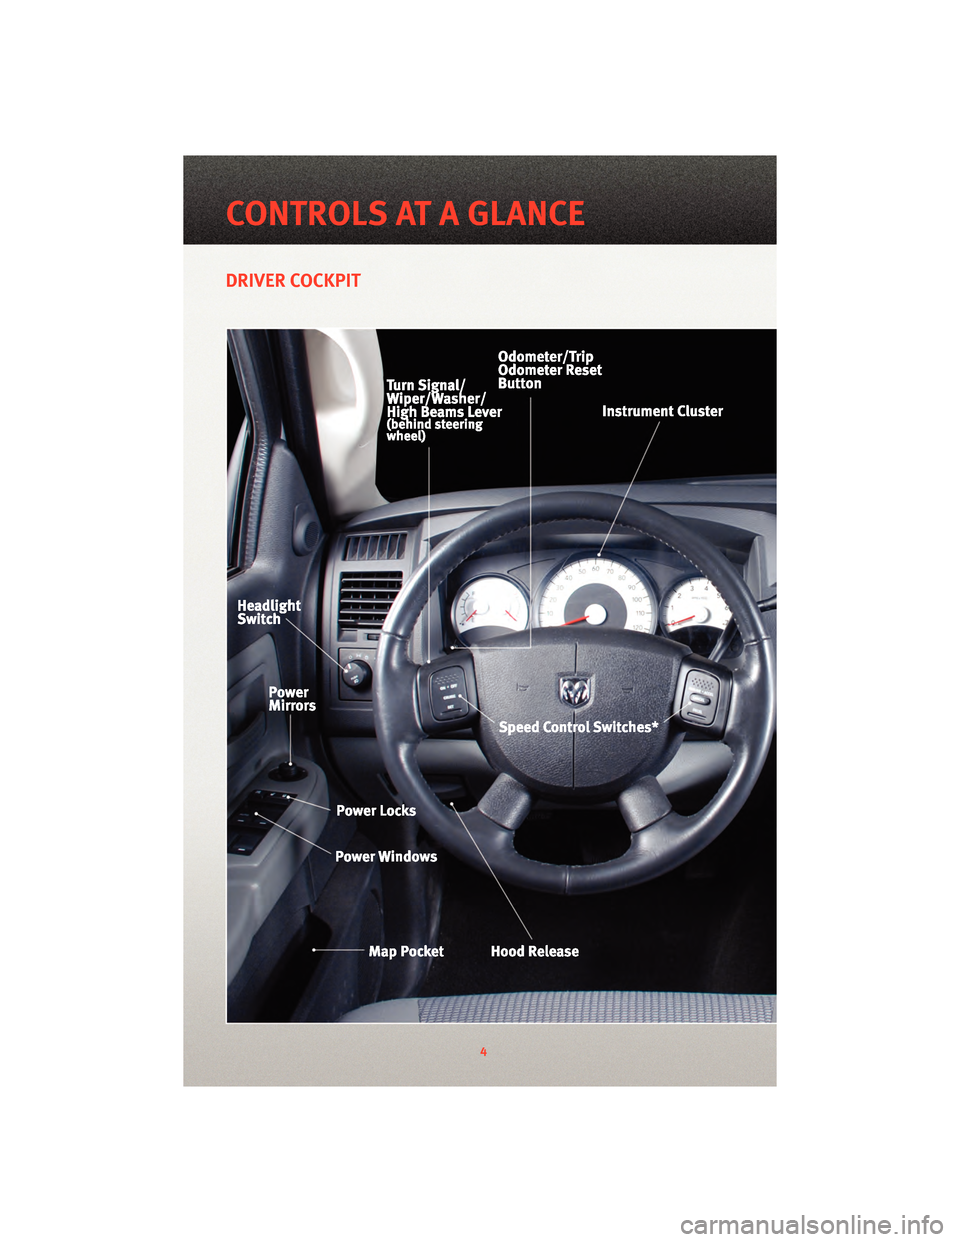 DODGE DAKOTA 2010 3.G User Guide DRIVER COCKPIT
4
CONTROLS AT A GLANCE 